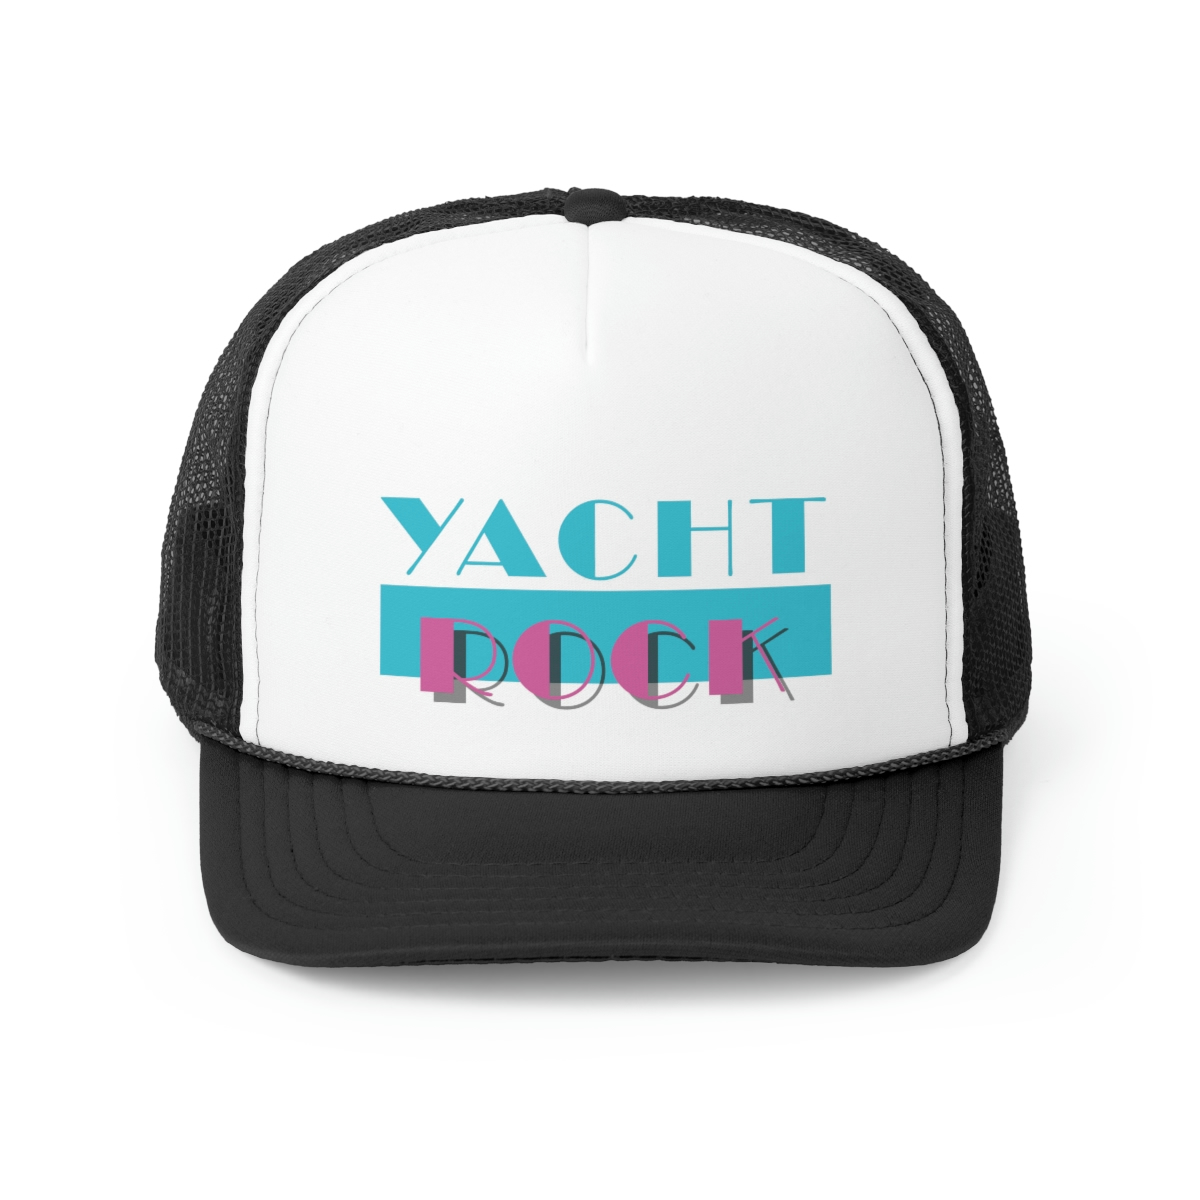 yachting trucker hat